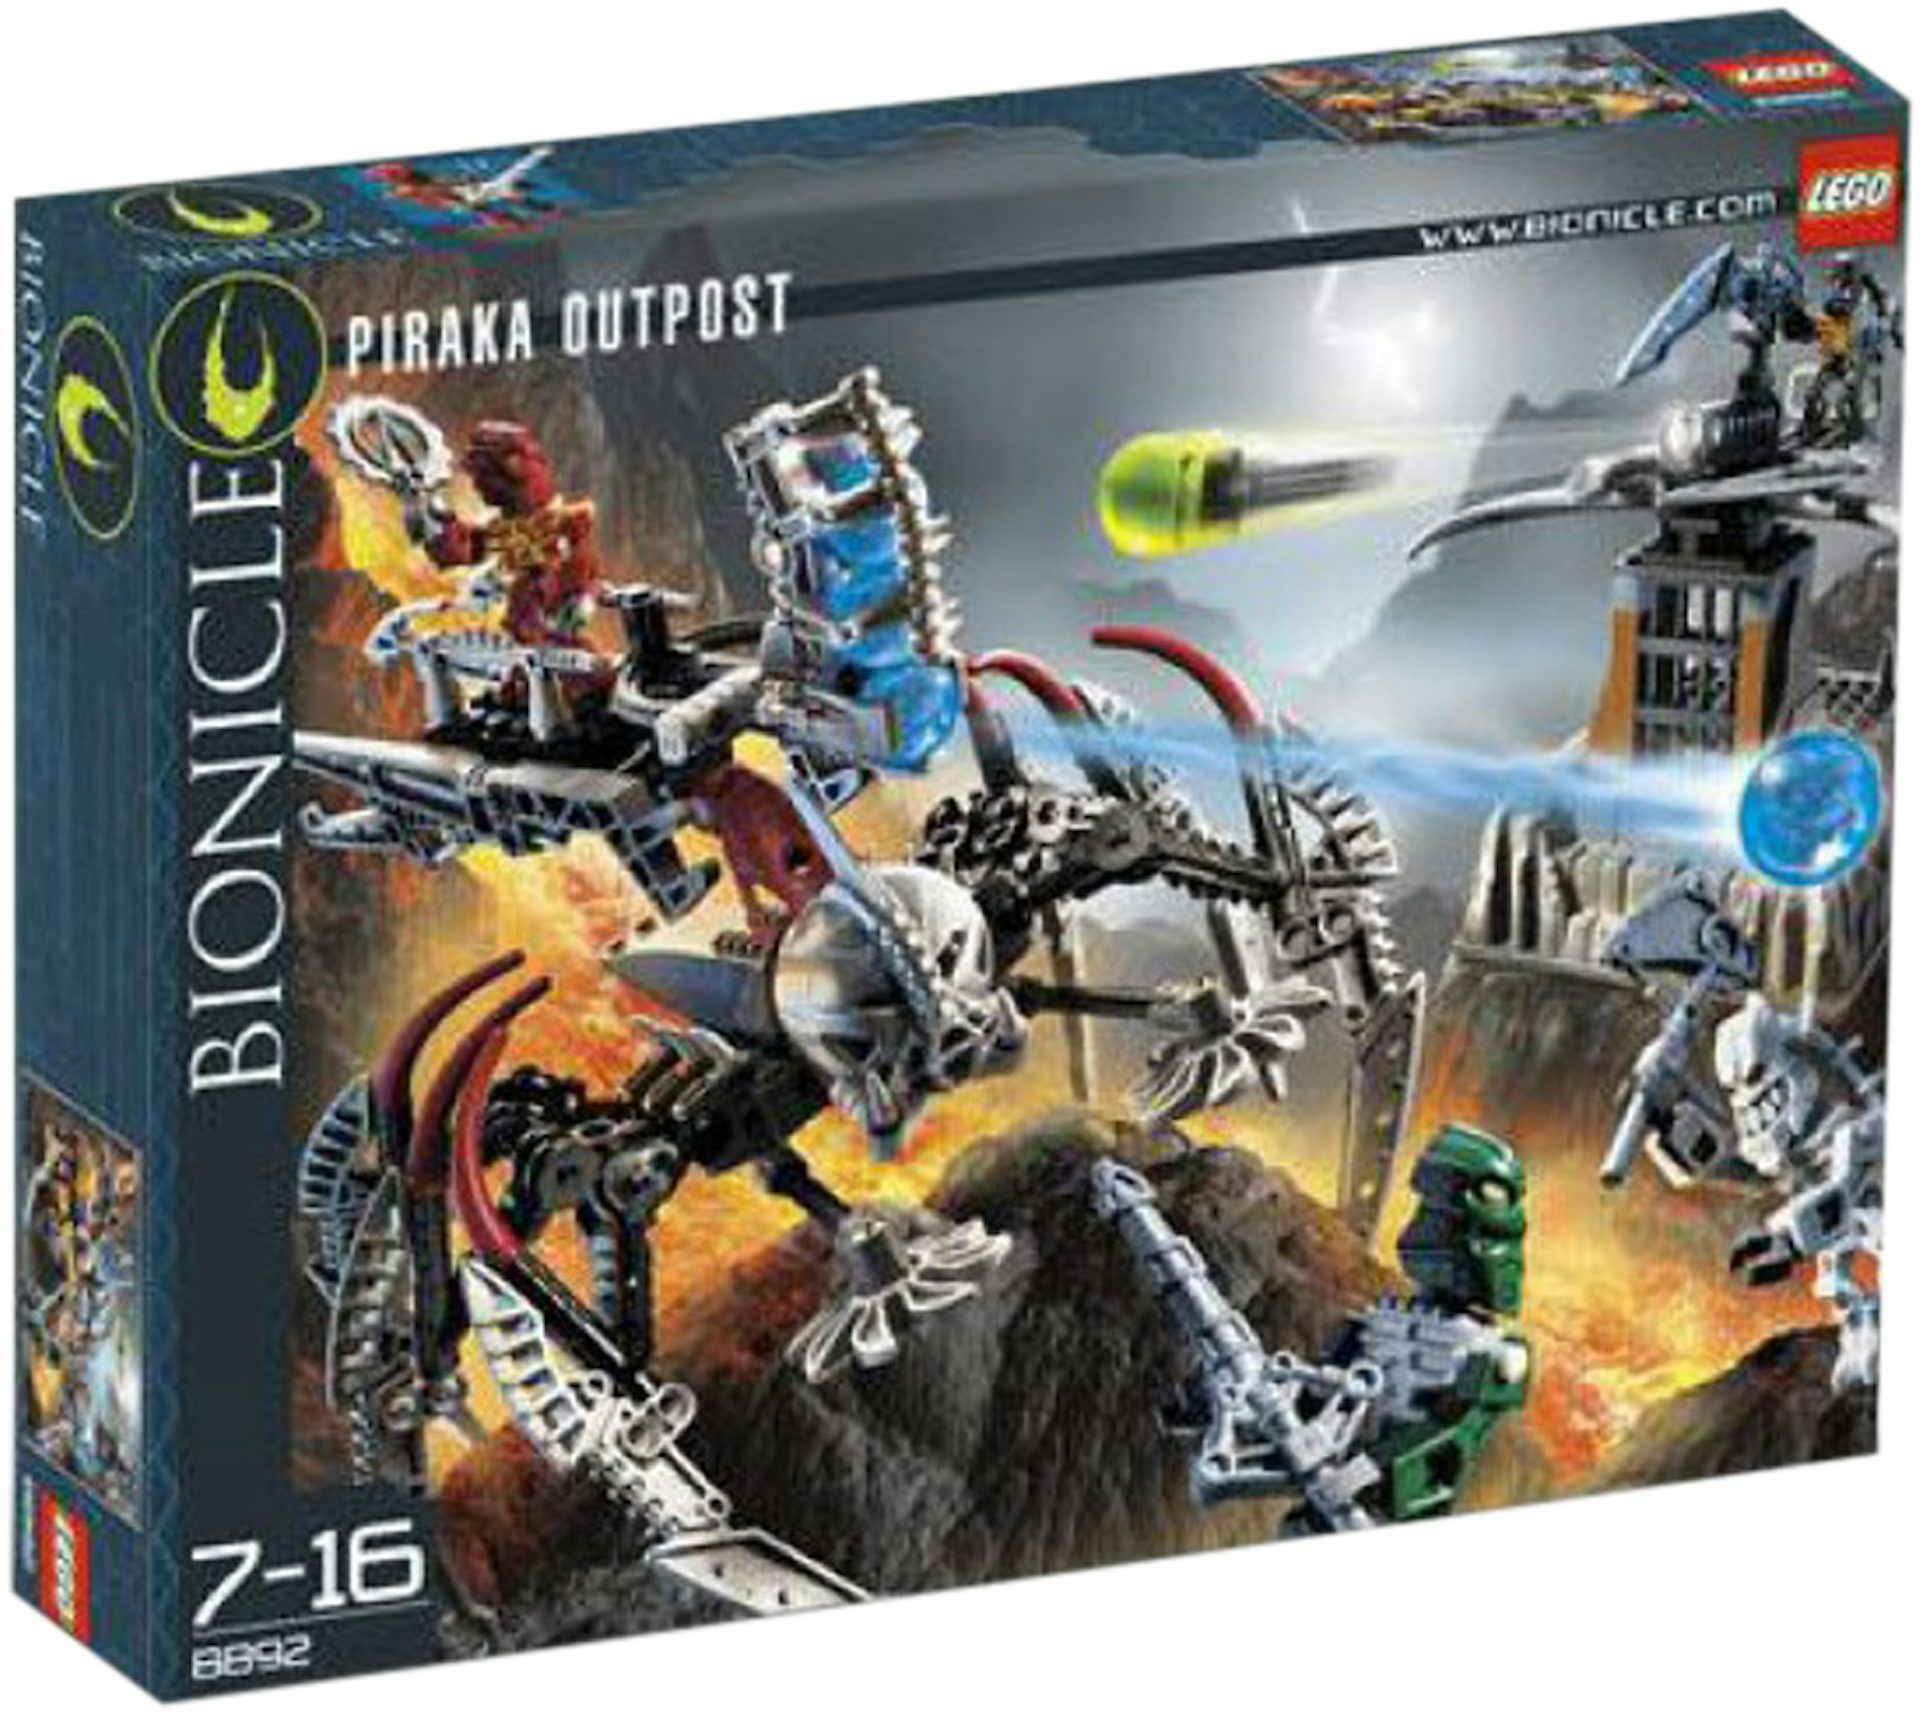 https://images.stockx.com/images/LEGO-Bionicle-Piraka-Outpost-Set-8892.jpg?fit=fill&bg=FFFFFF&w=1200&h=857&fm=jpg&auto=compress&dpr=2&trim=color&updated_at=1647883701&q=60